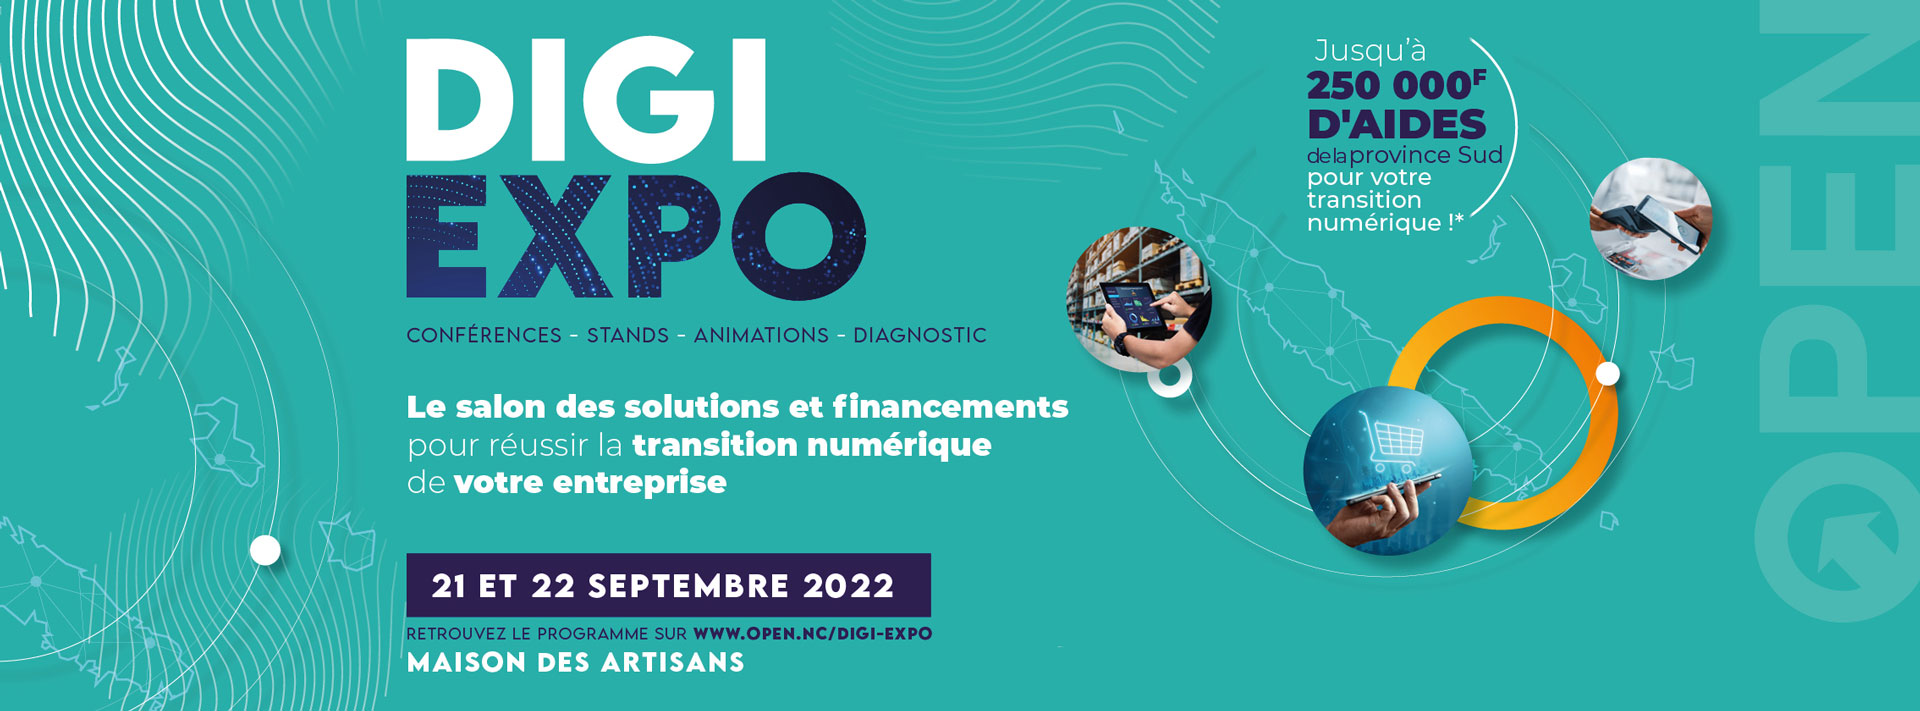 Visuel master Digi Expo 2022